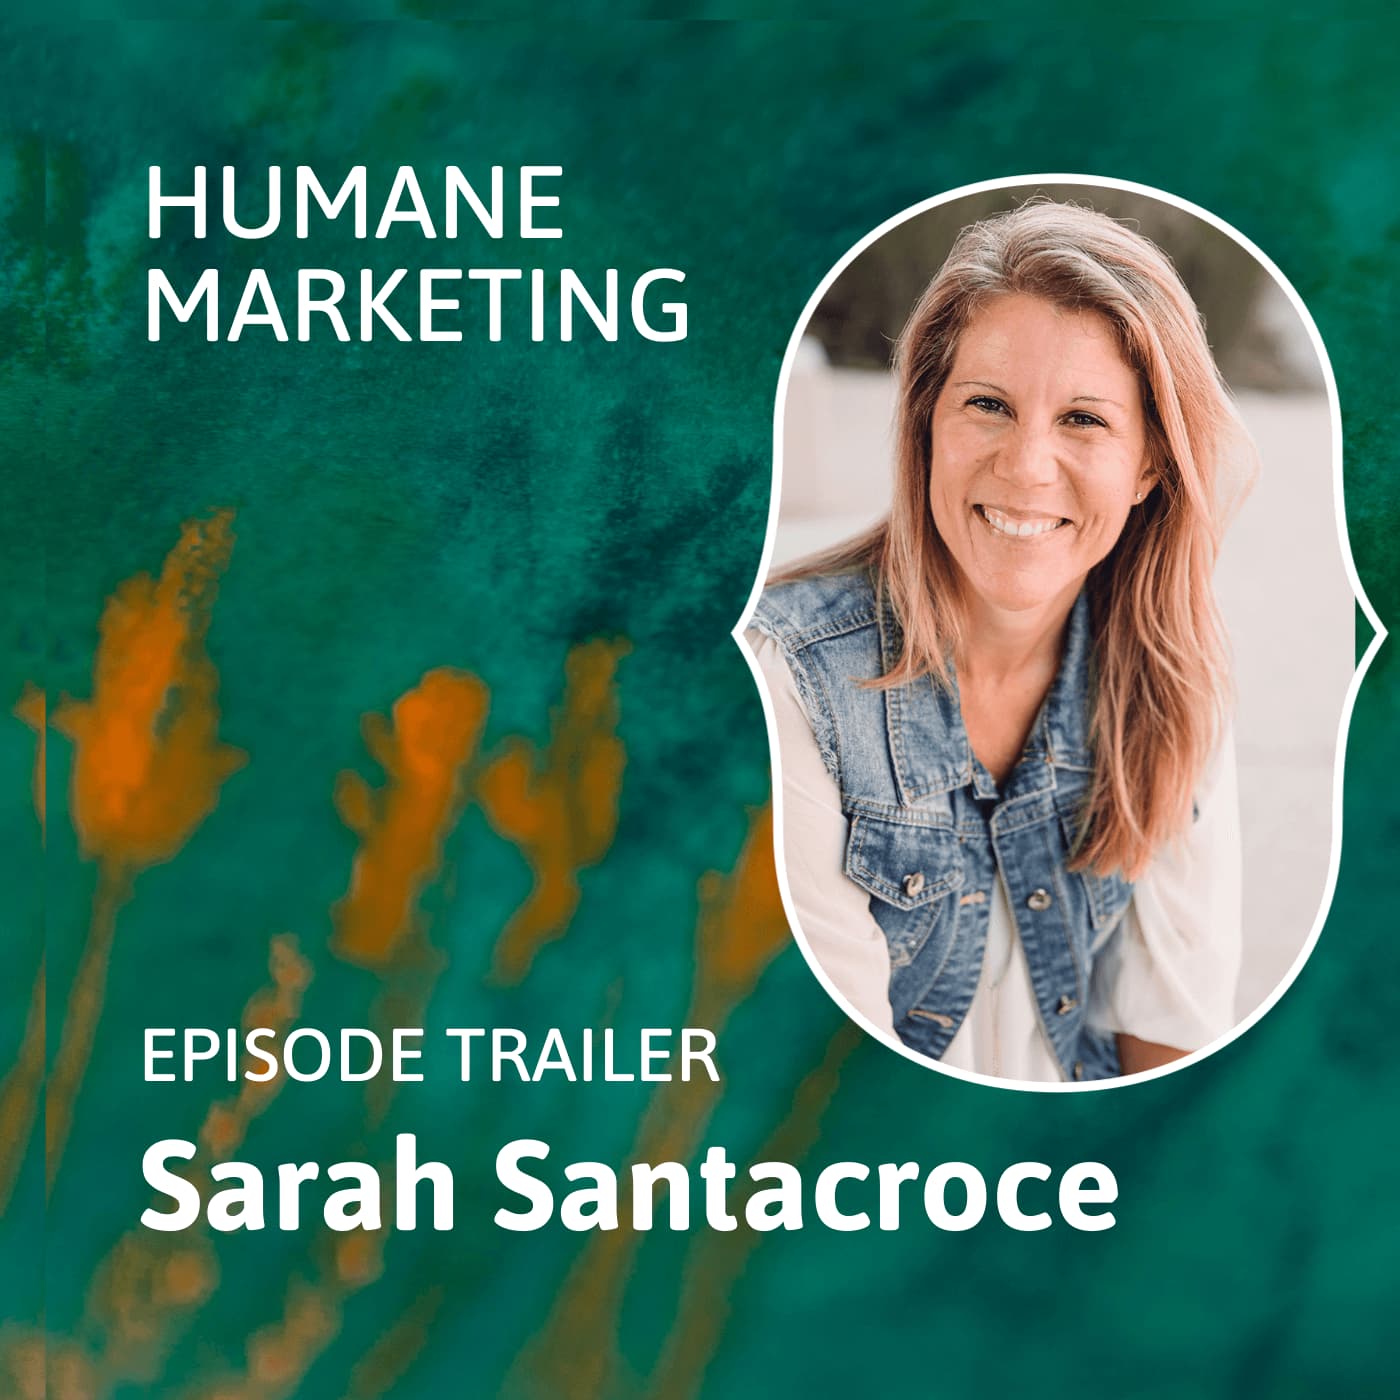 The Story of Humane Marketing